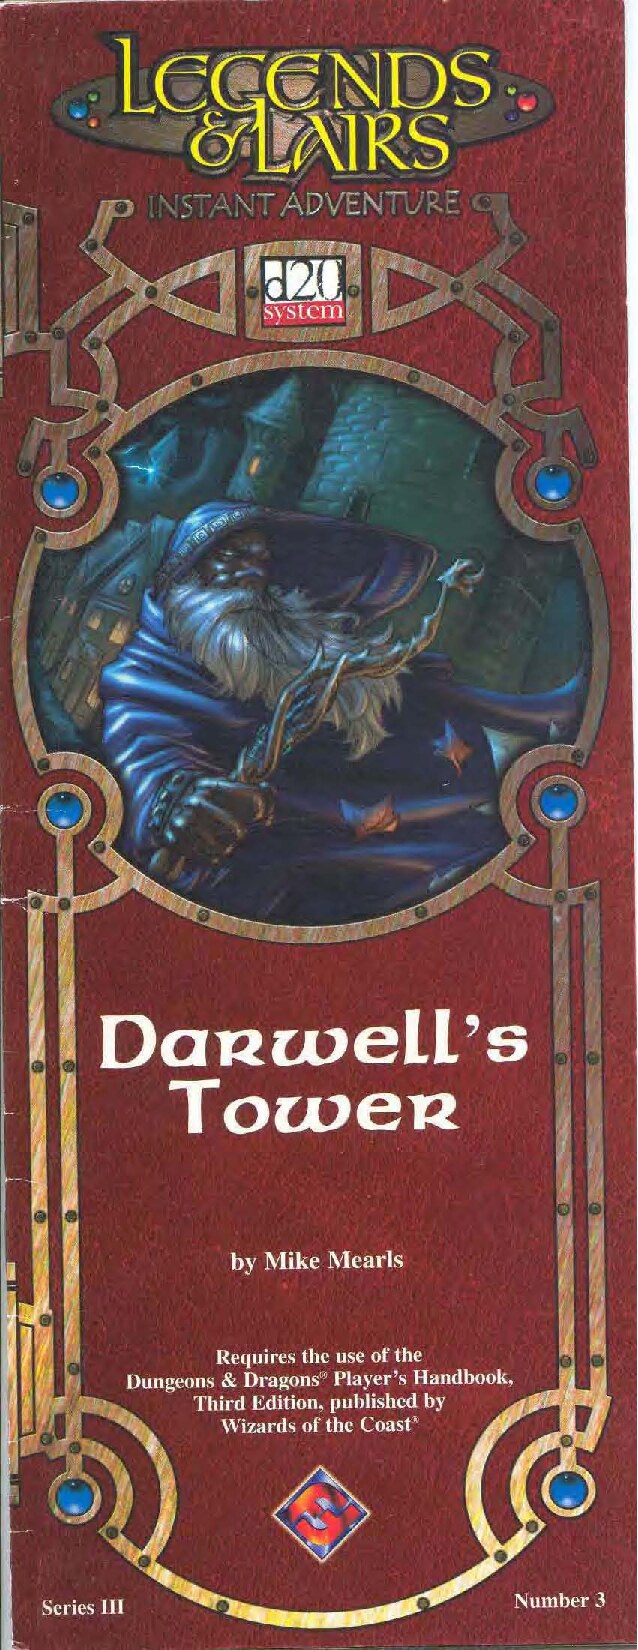 Darwell's Tower